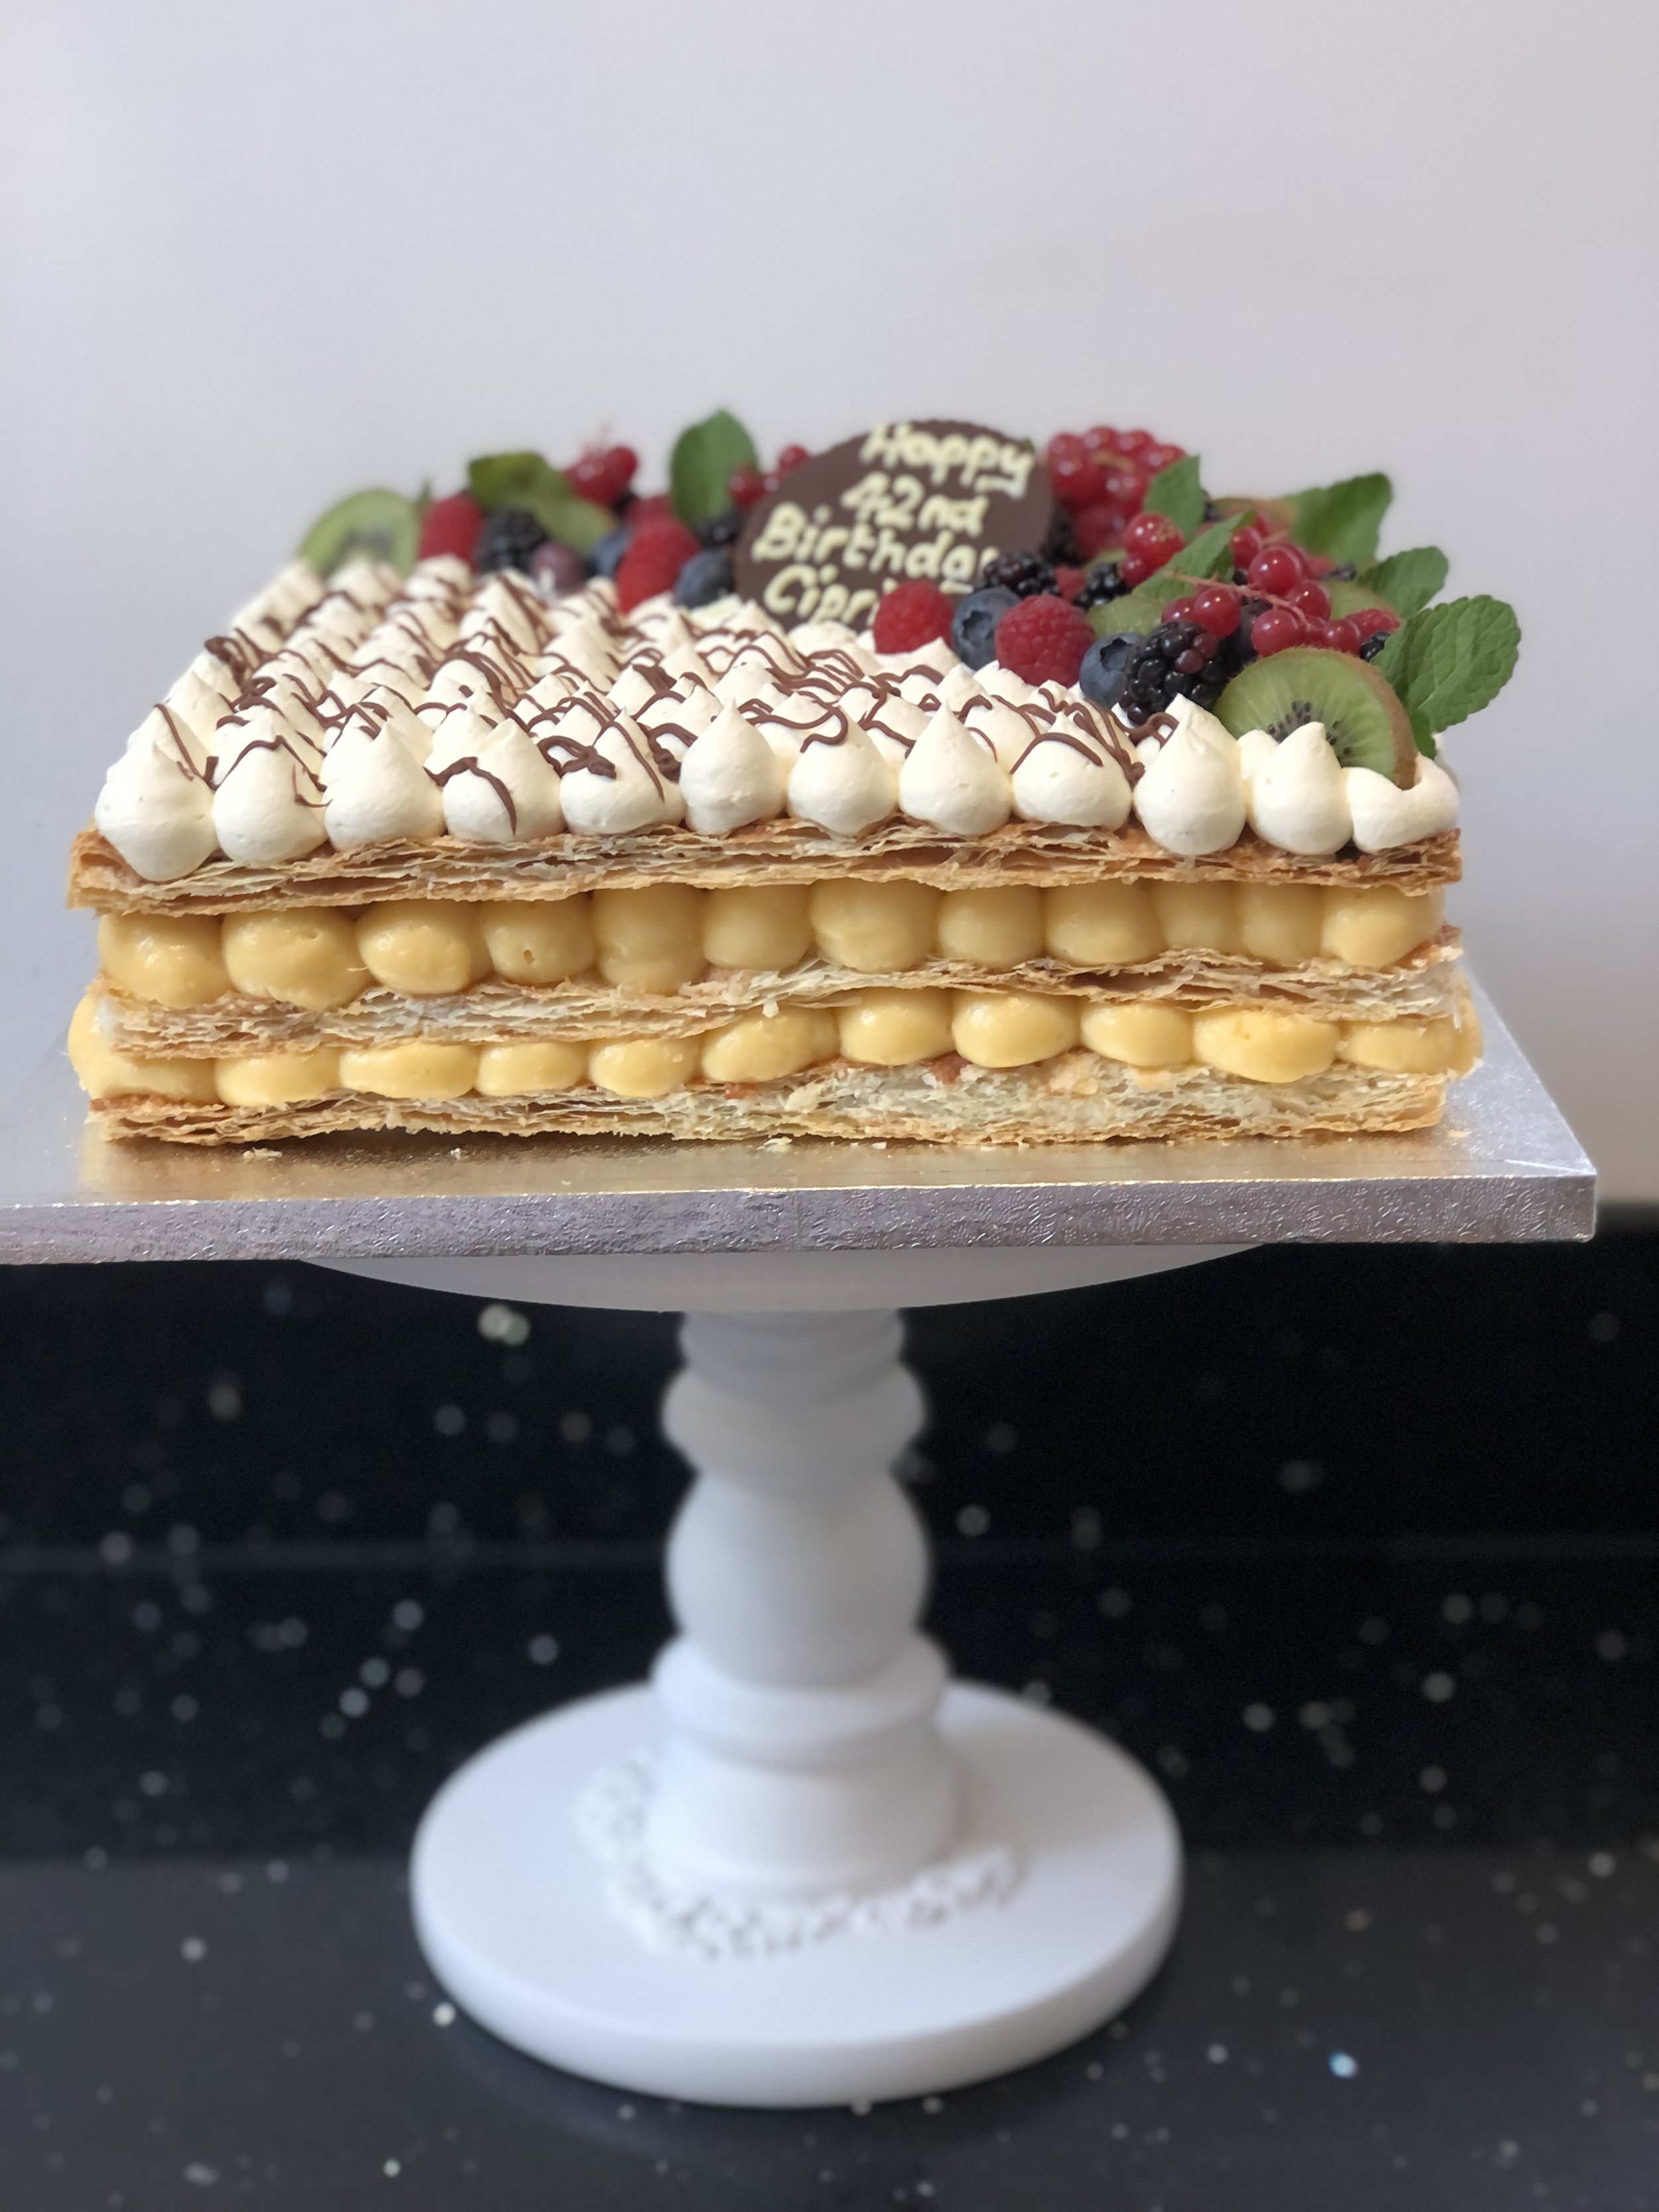 Italian celebration cakes